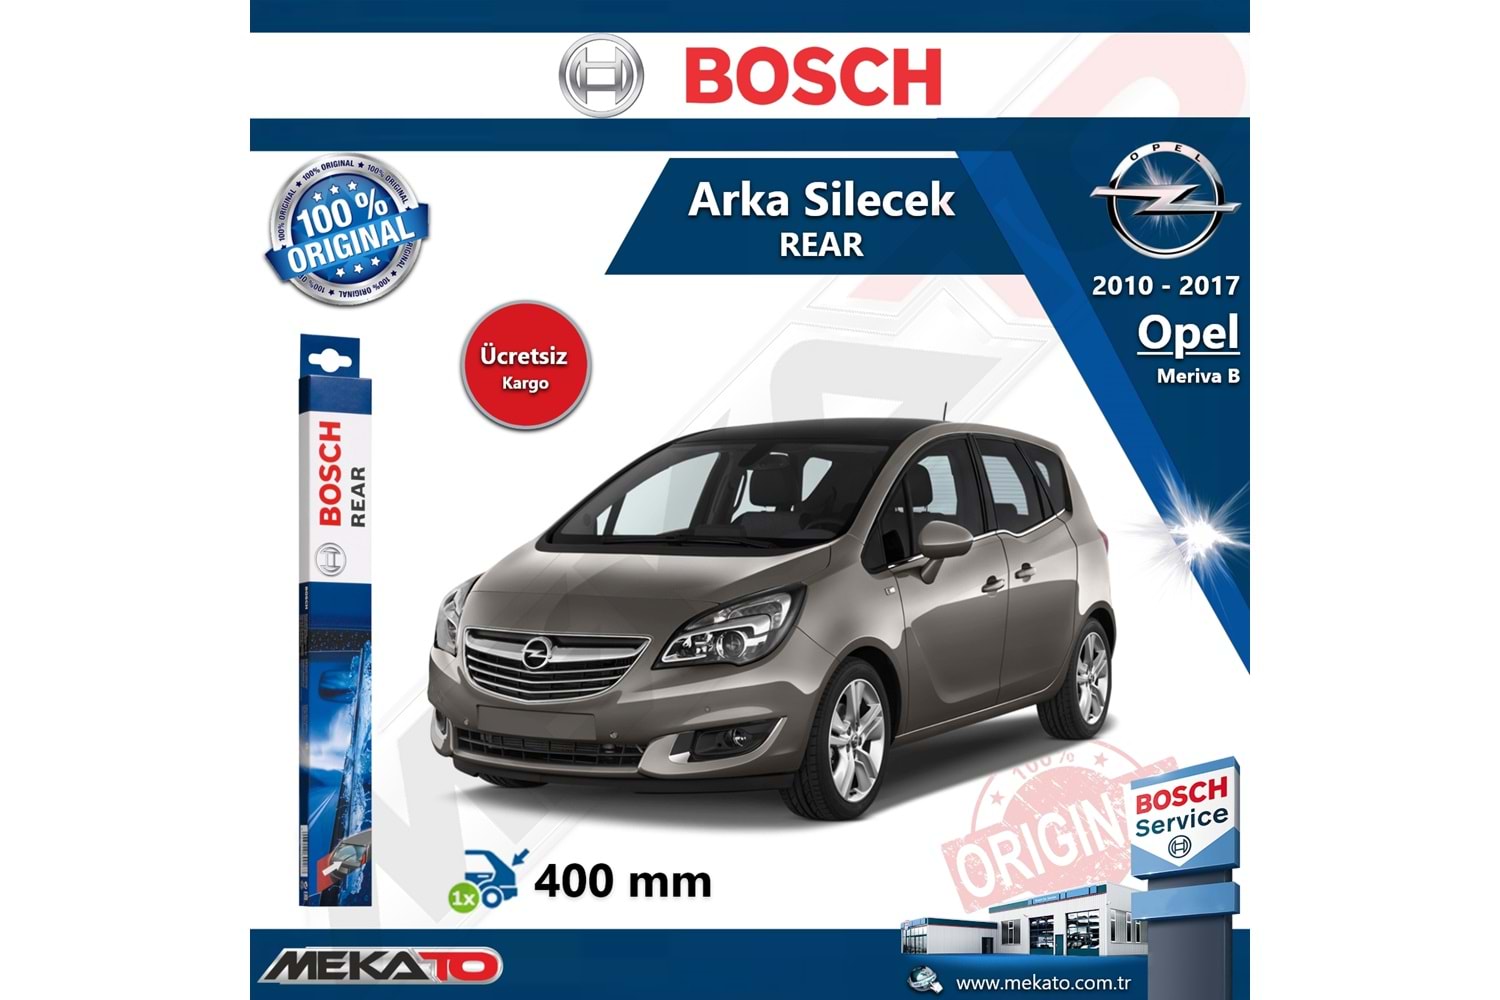 Opel Meriva B Arka Silecek Bosch Rear 2010-2017